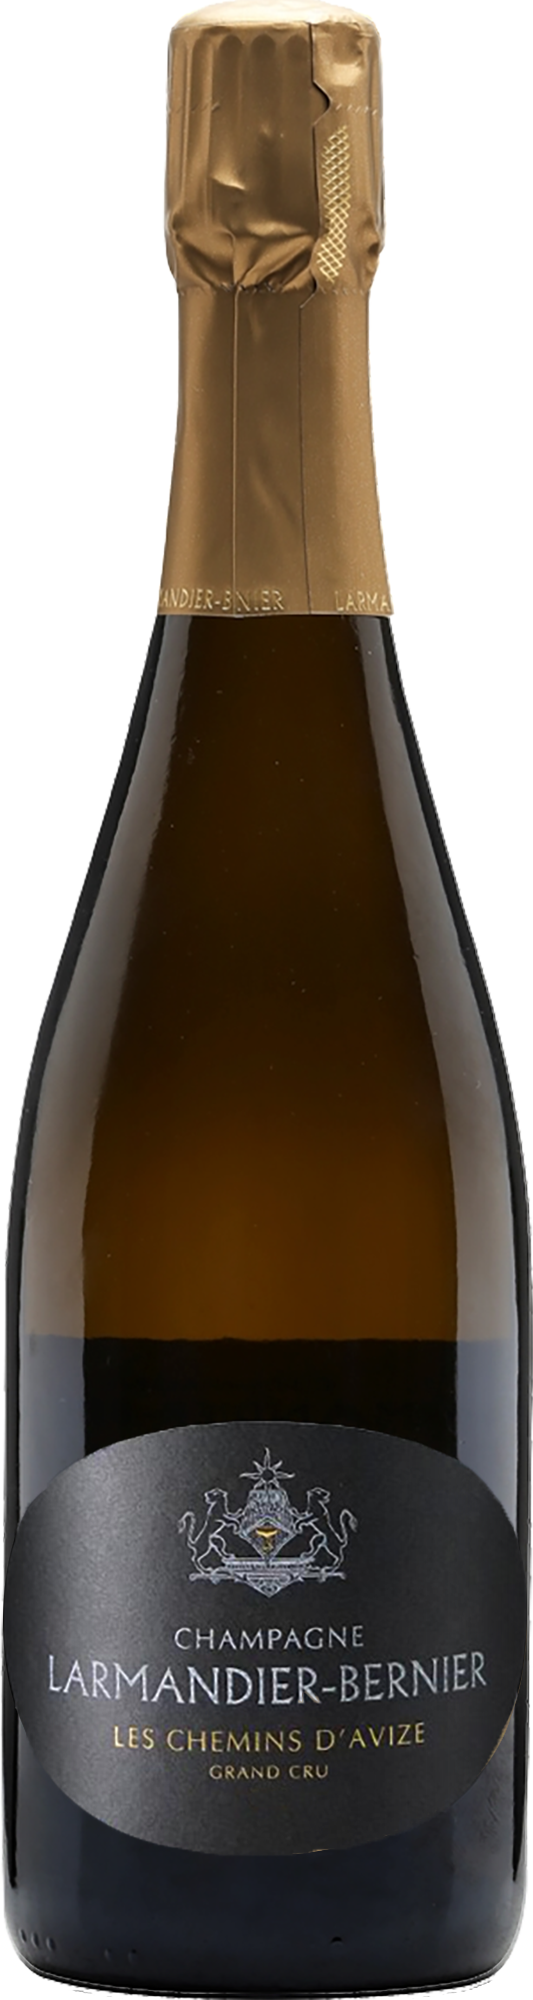 Champagne Larmandier-Bernier Grand Cru Les Chemins d'Avize 2014 (Disg. Dec 2021)